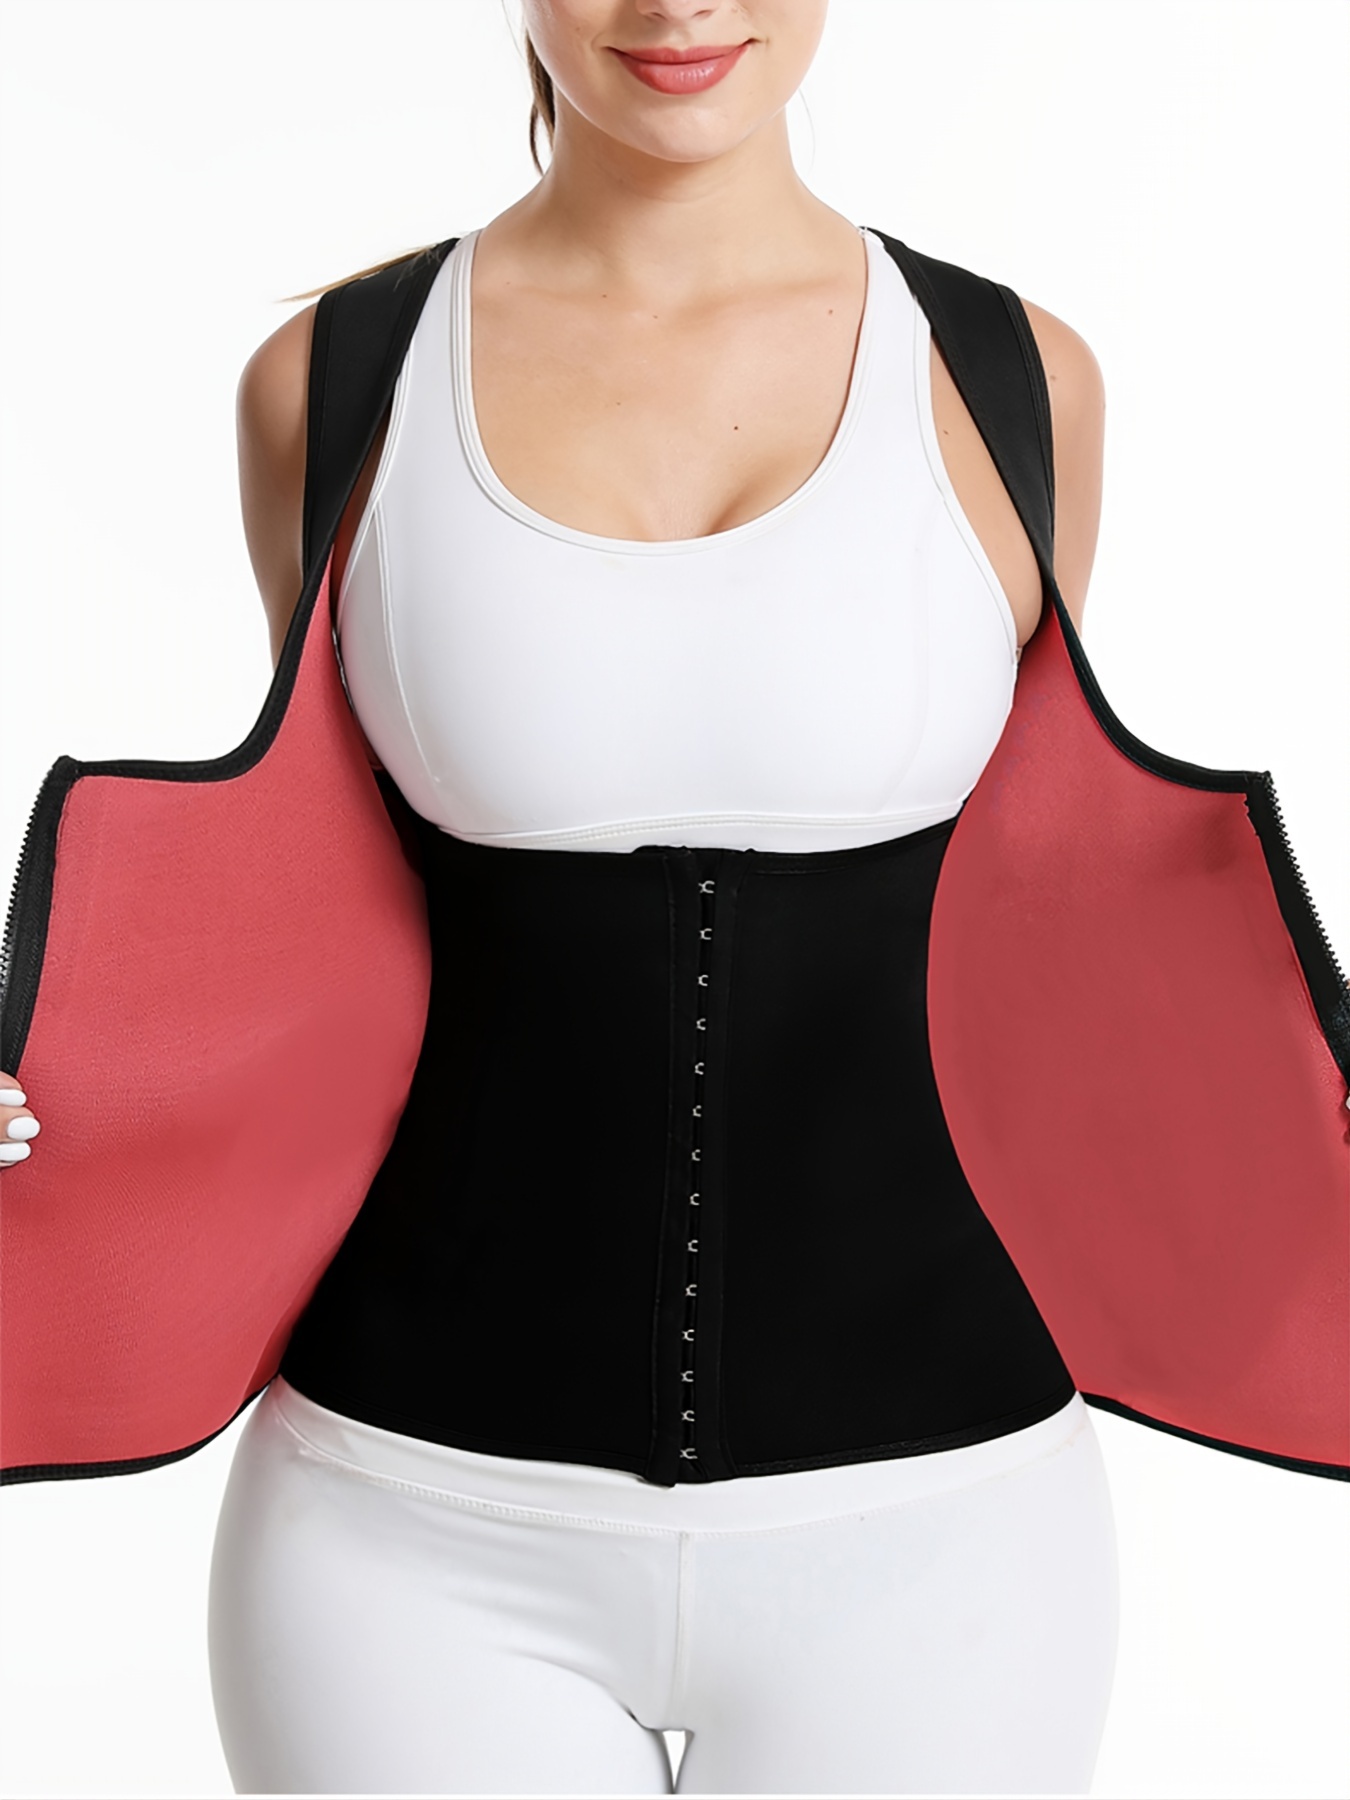 JUNLAN Waist Trainer Bodysuits Women Clothing Tummy Control